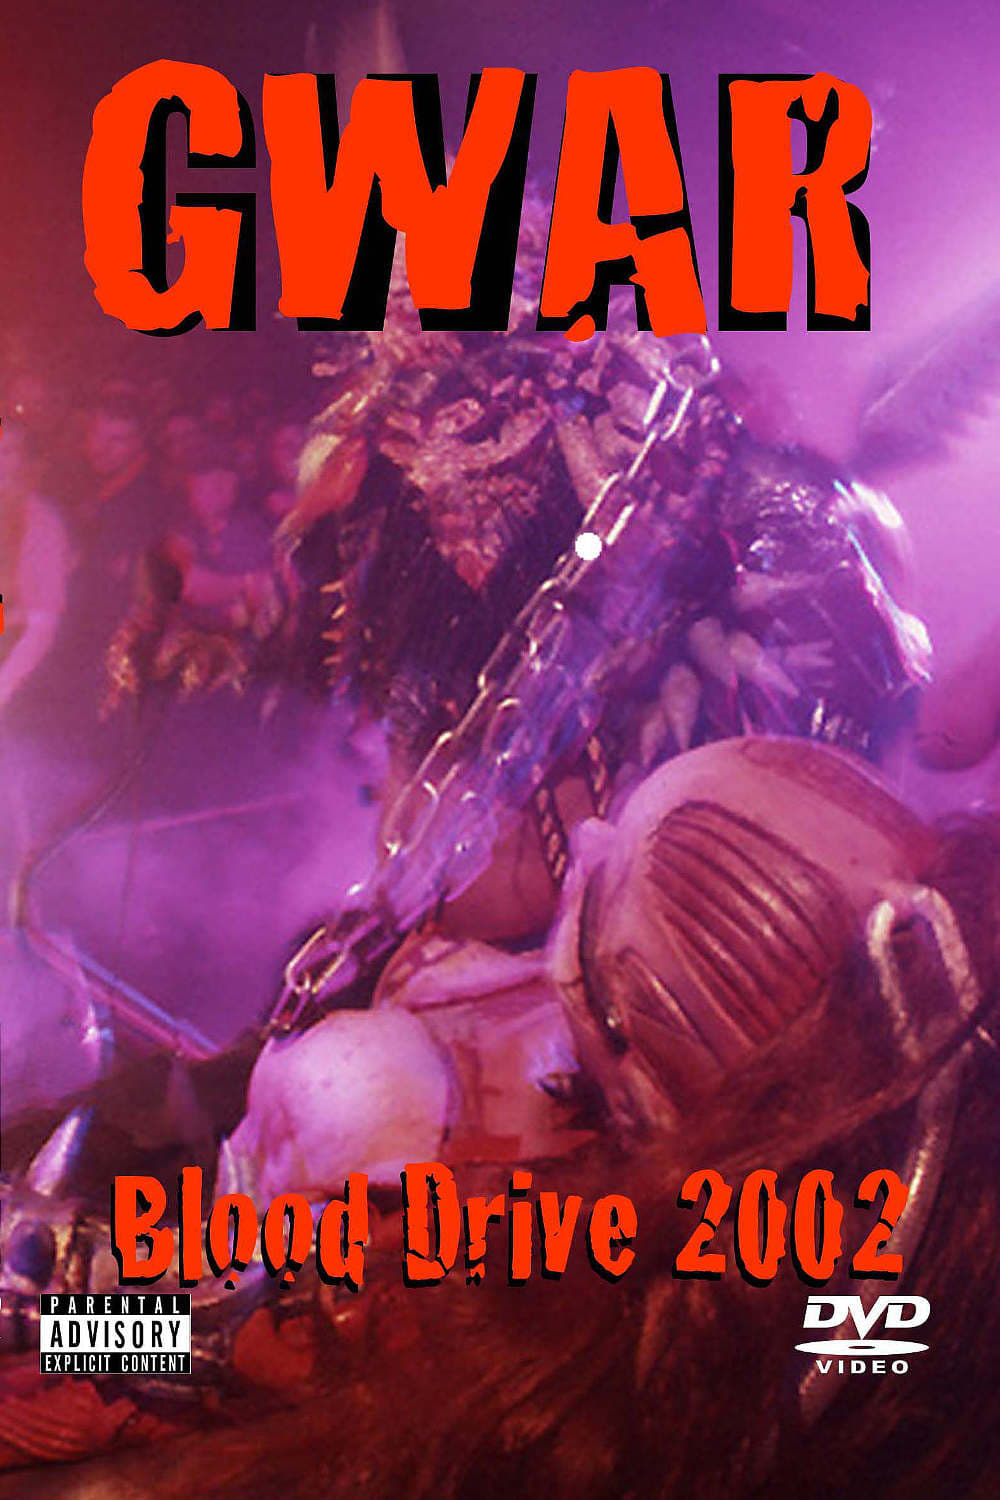 GWAR: Blood drive 2002